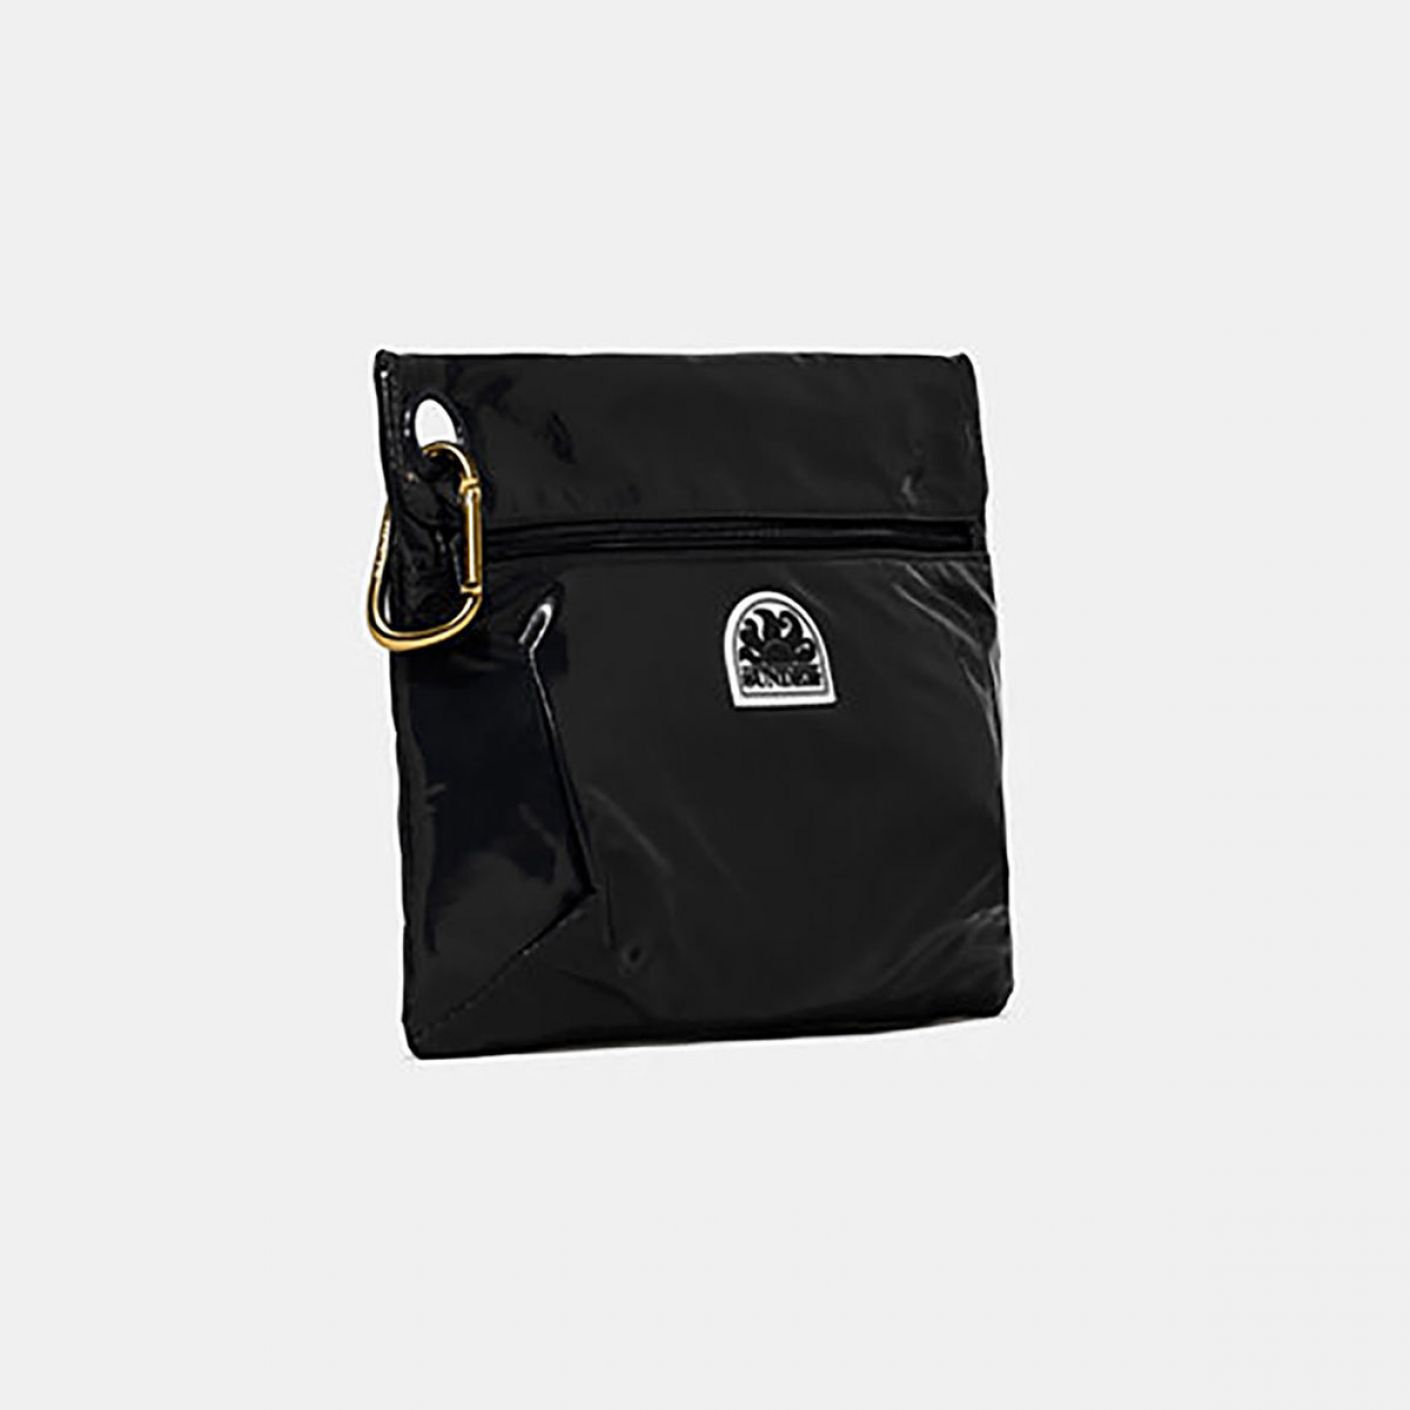 Sundek Clutch Clutch Bag with Black Carabiner